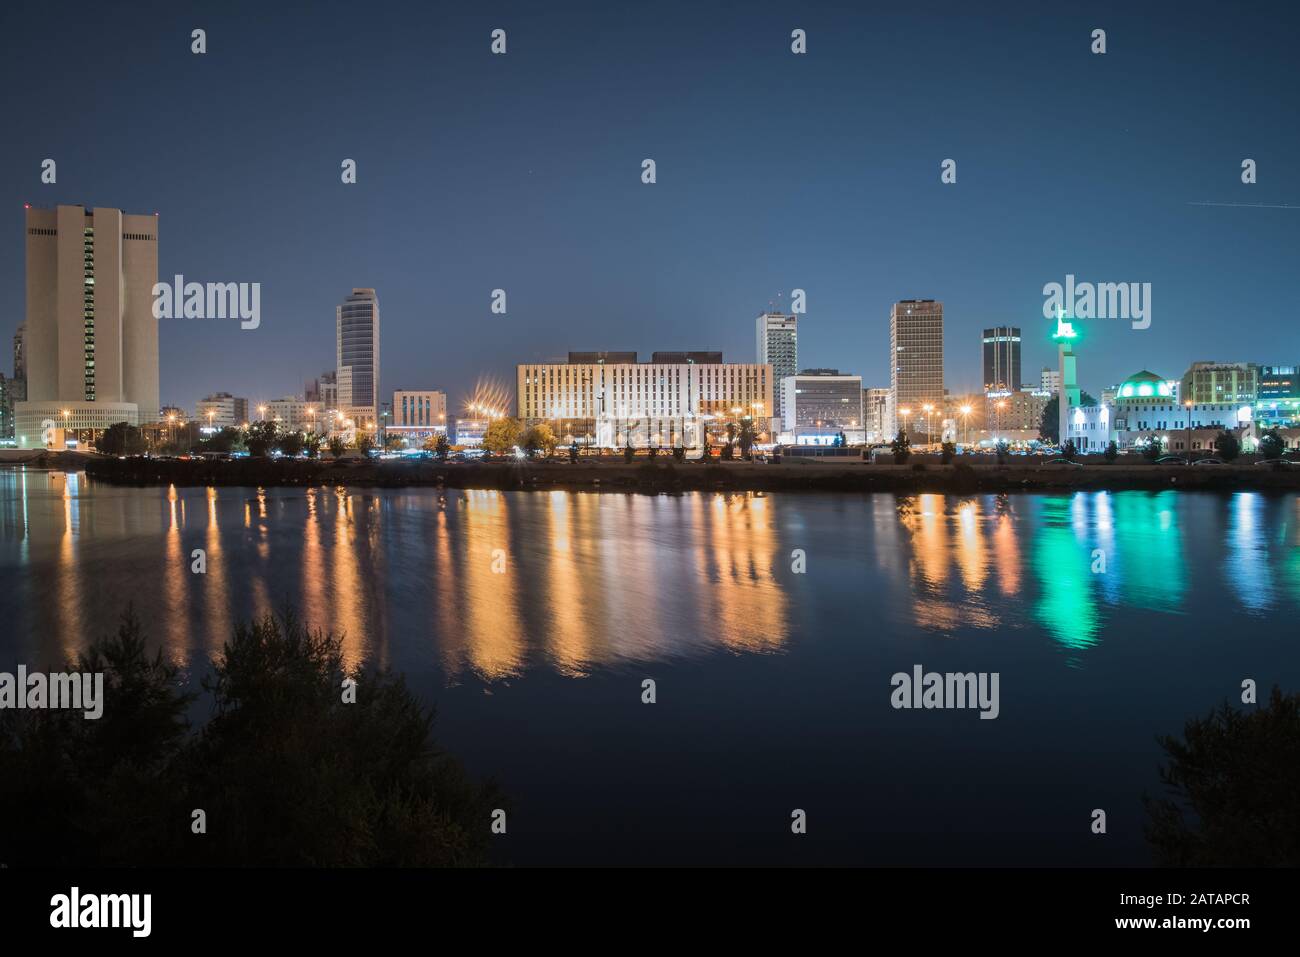 Al Balad, Jeddah City Center Night View Stock Photo